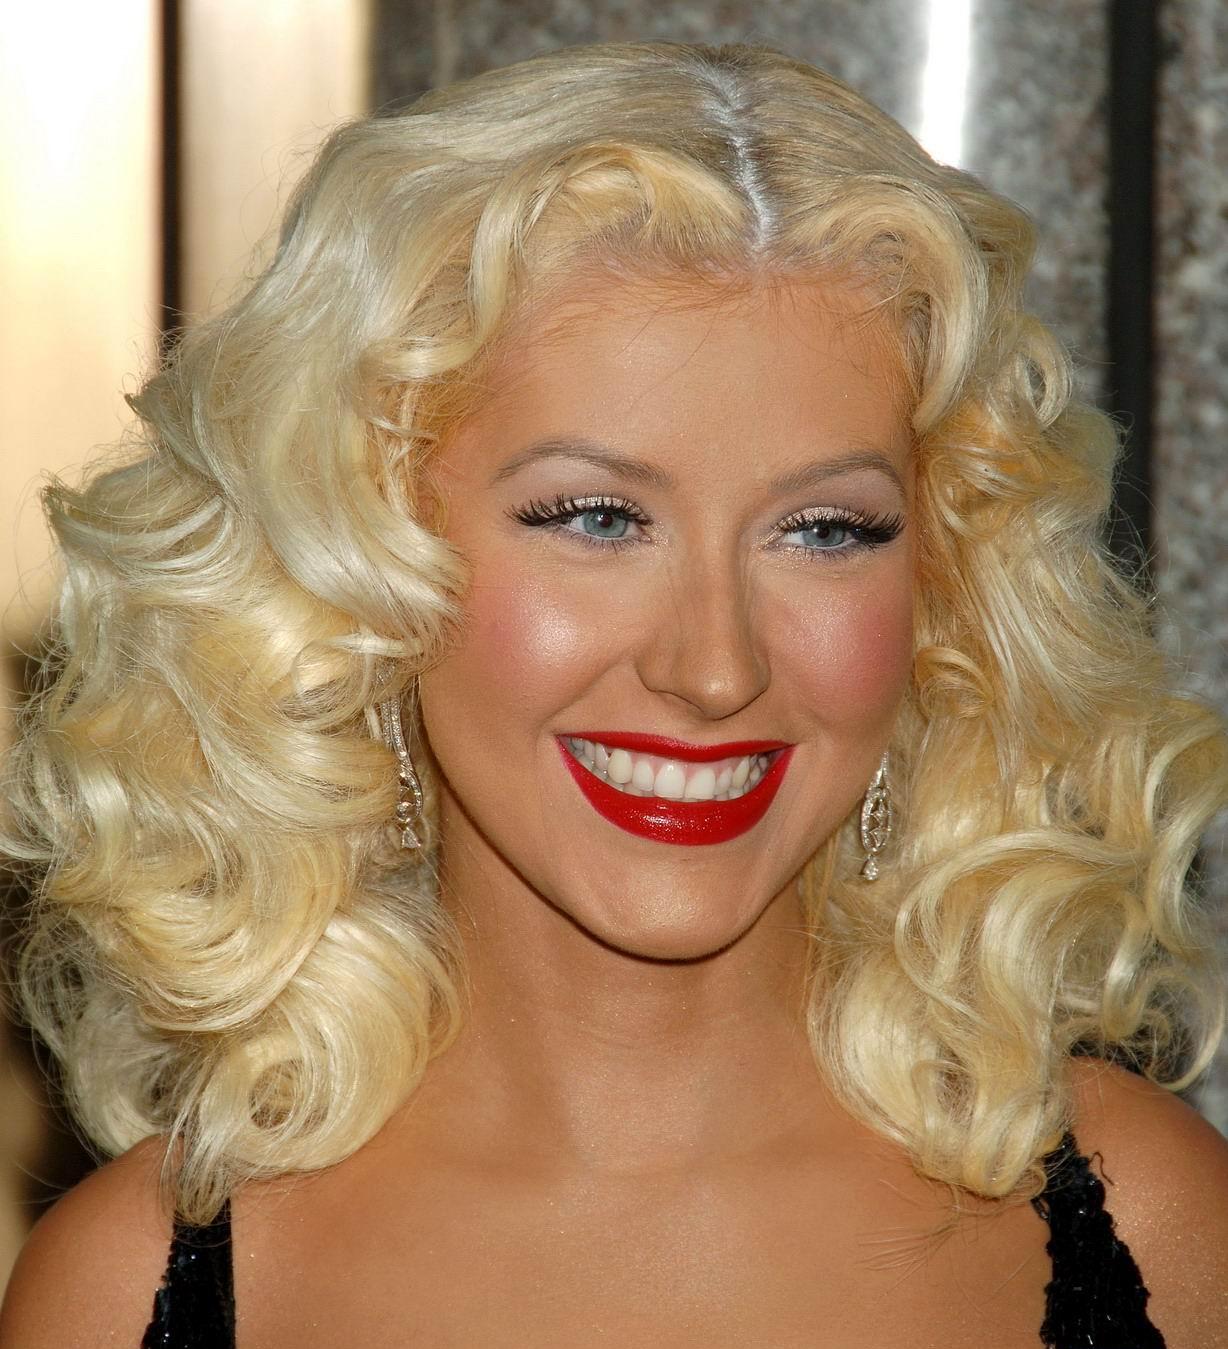 Christina Aguilera photo 5066 of 10848 pics, wallpaper - photo #509443 ...